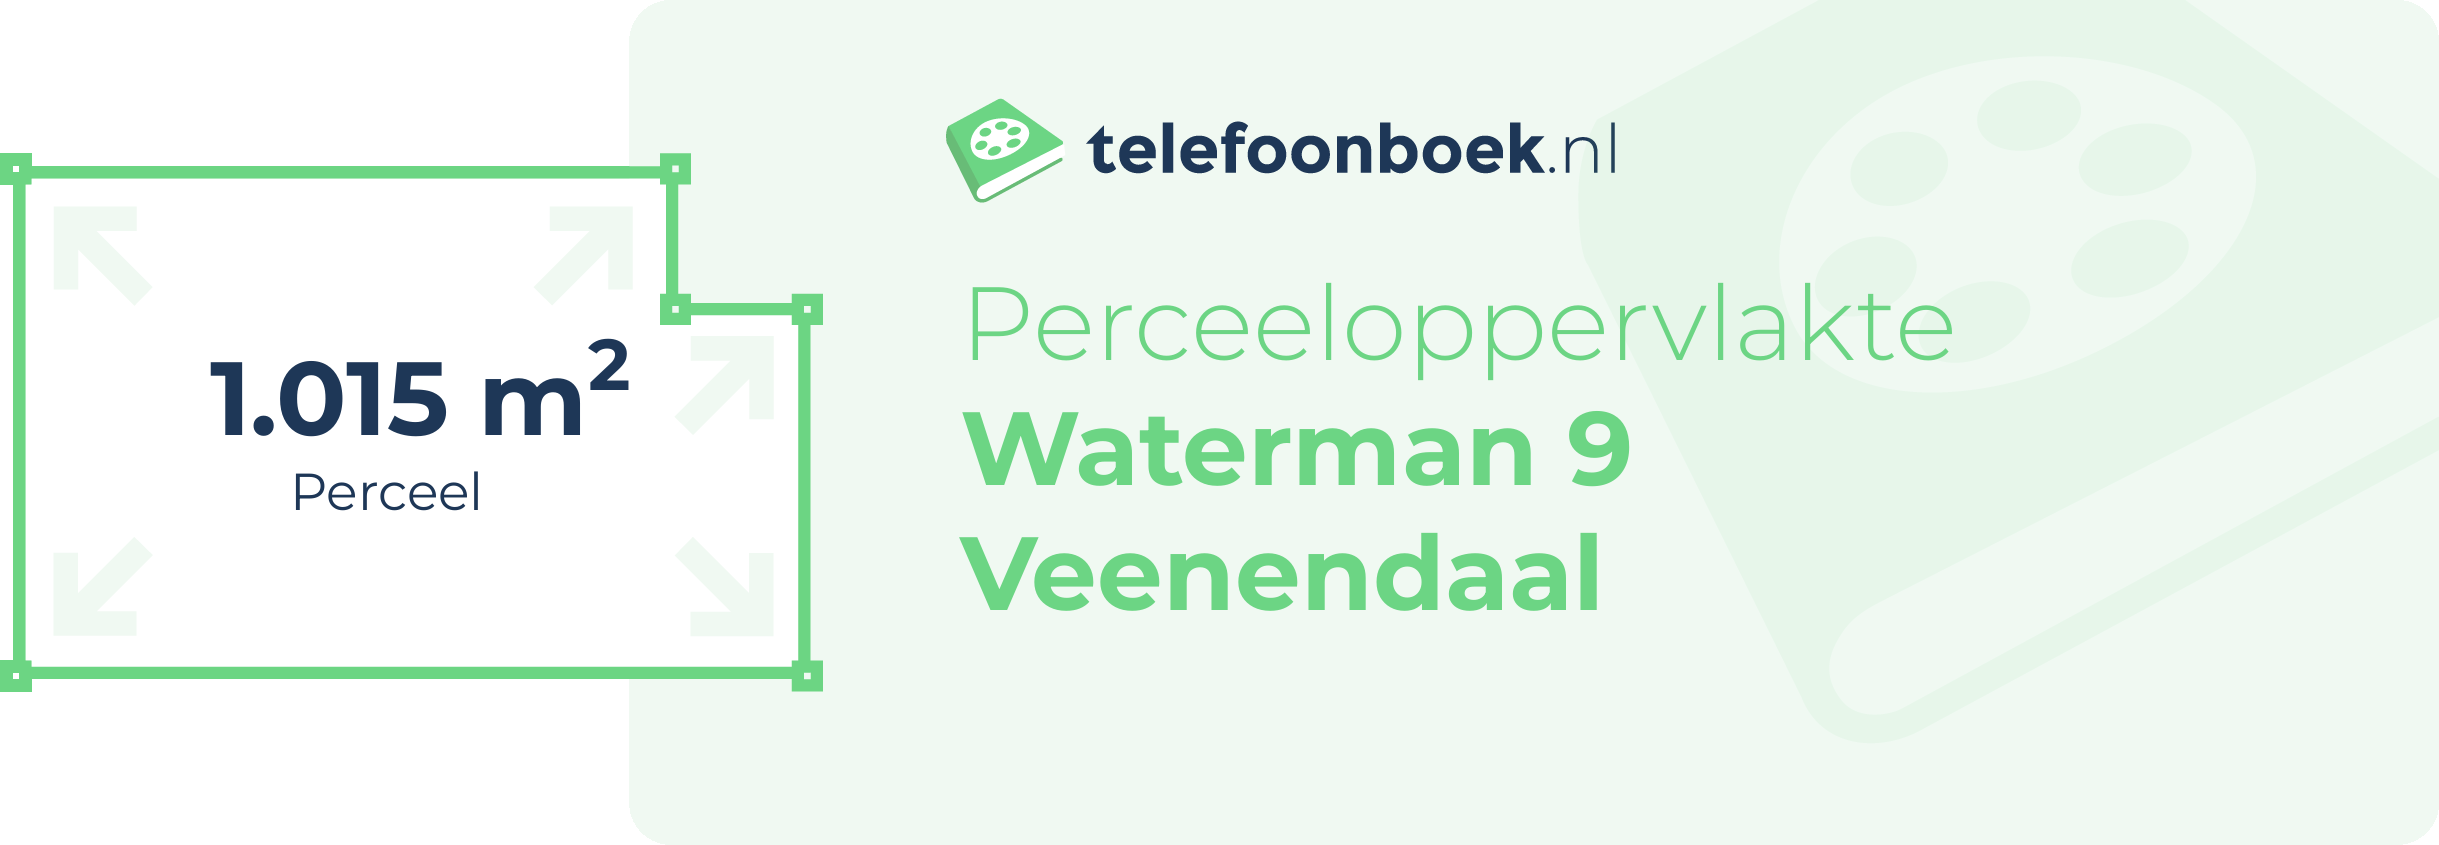 Perceeloppervlakte Waterman 9 Veenendaal